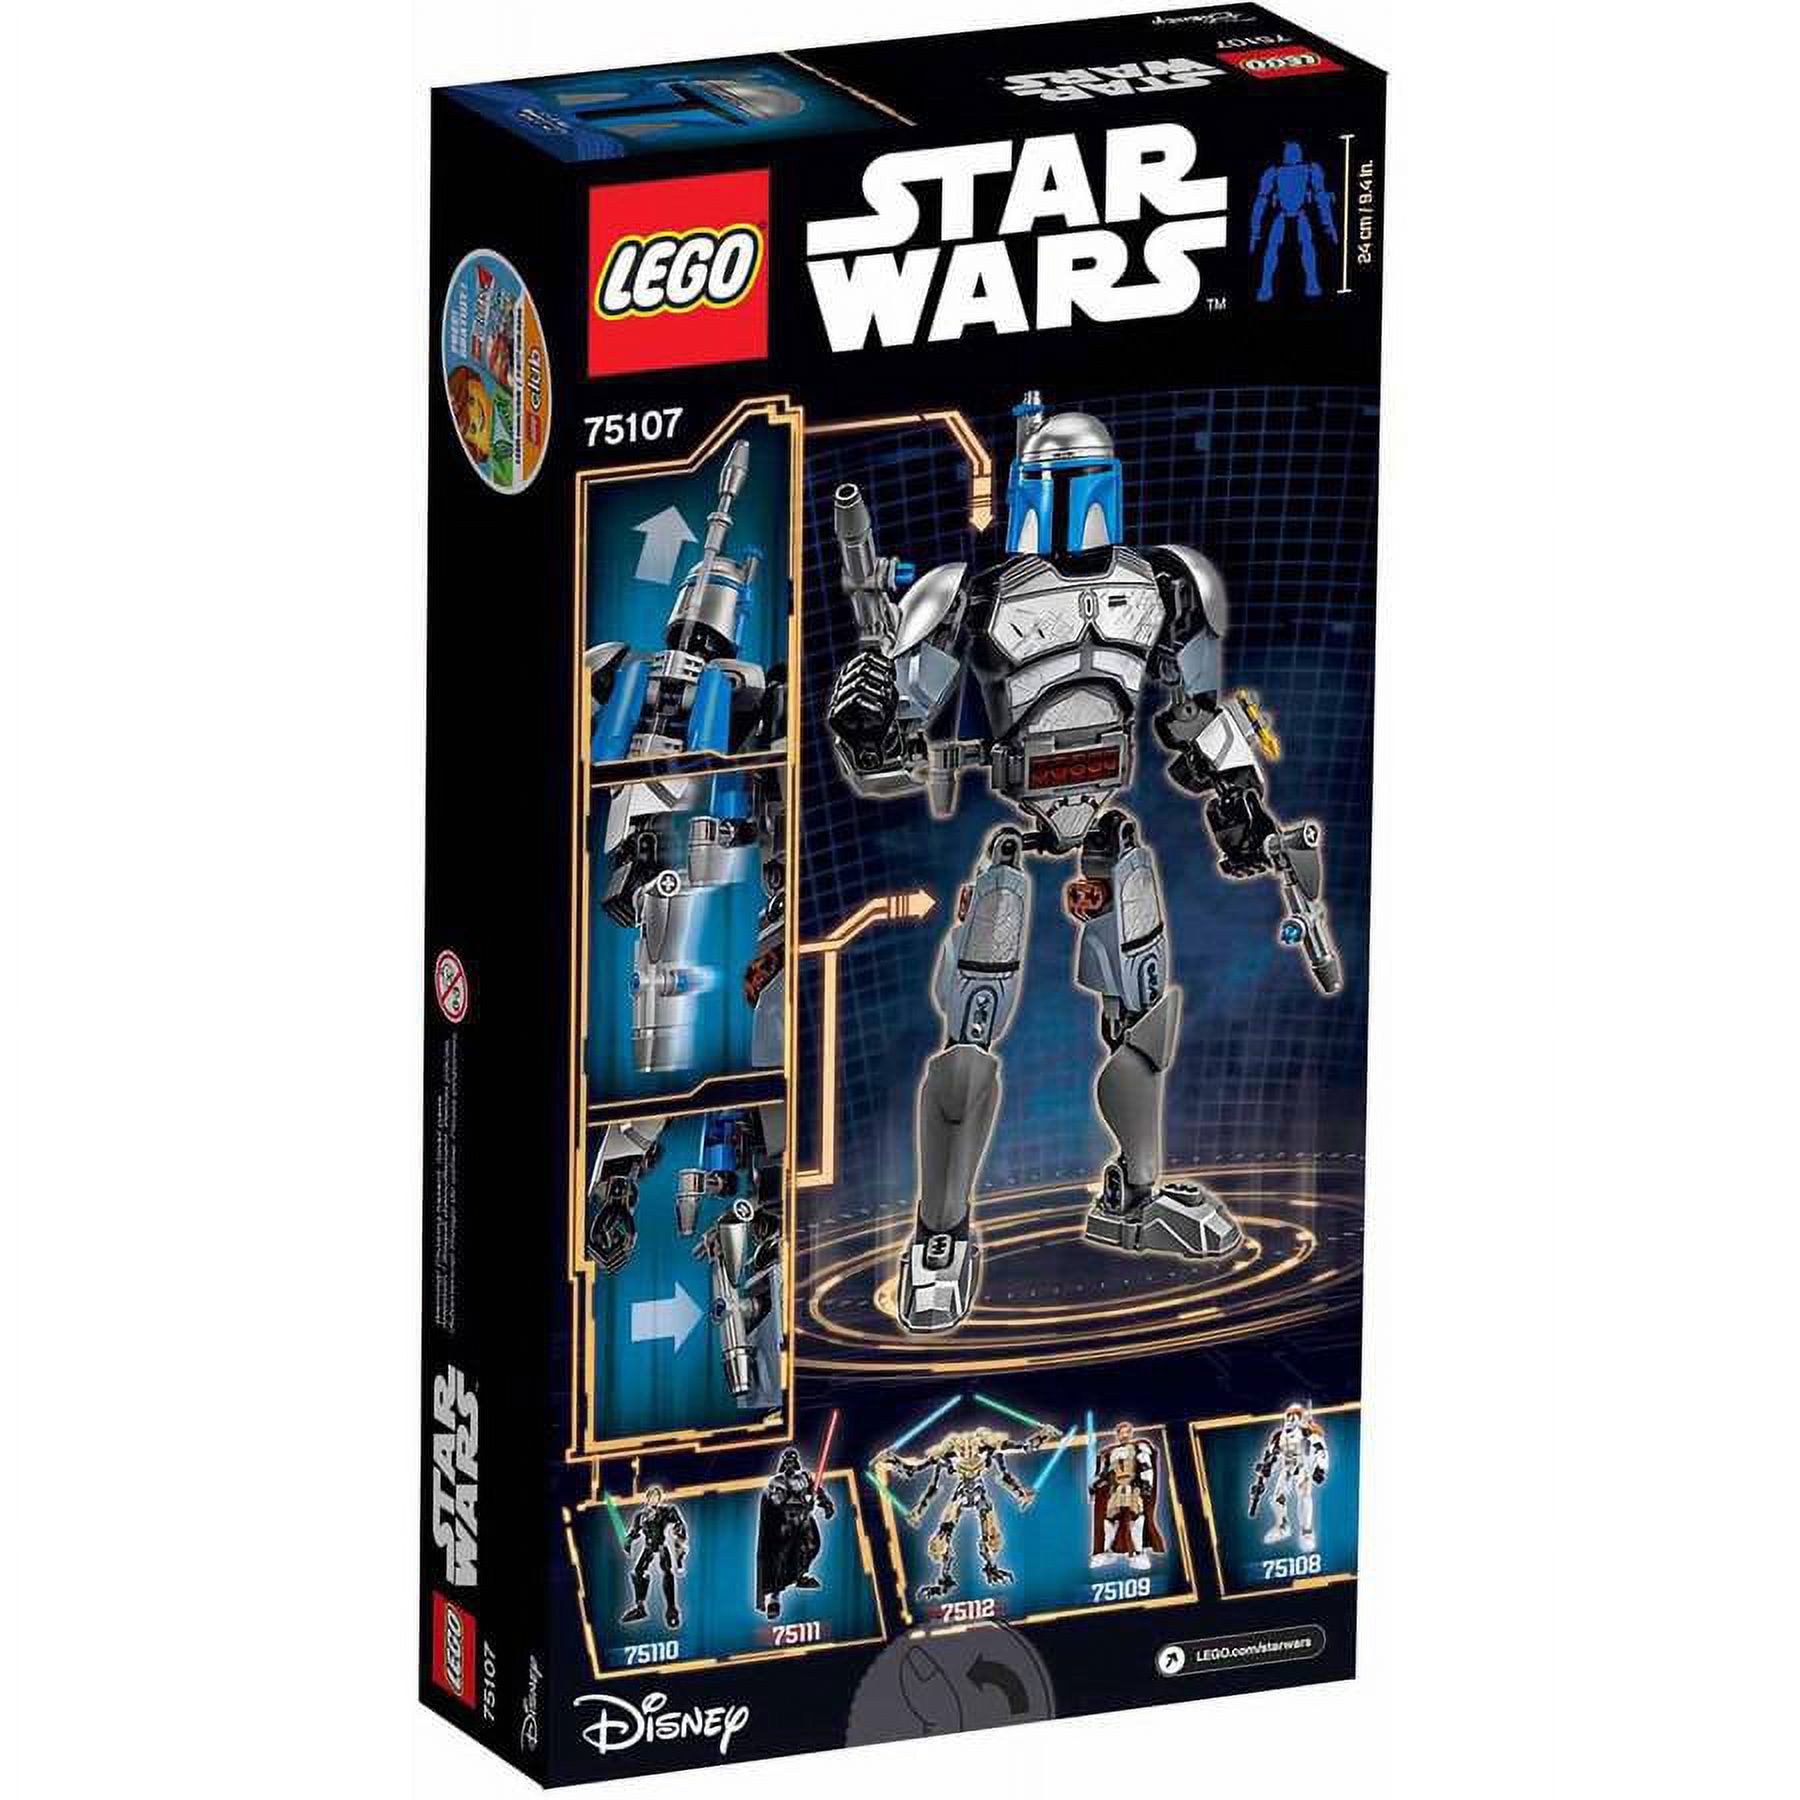 LEGO Star Wars 75107 Jango Fett Building Kit - image 3 of 5